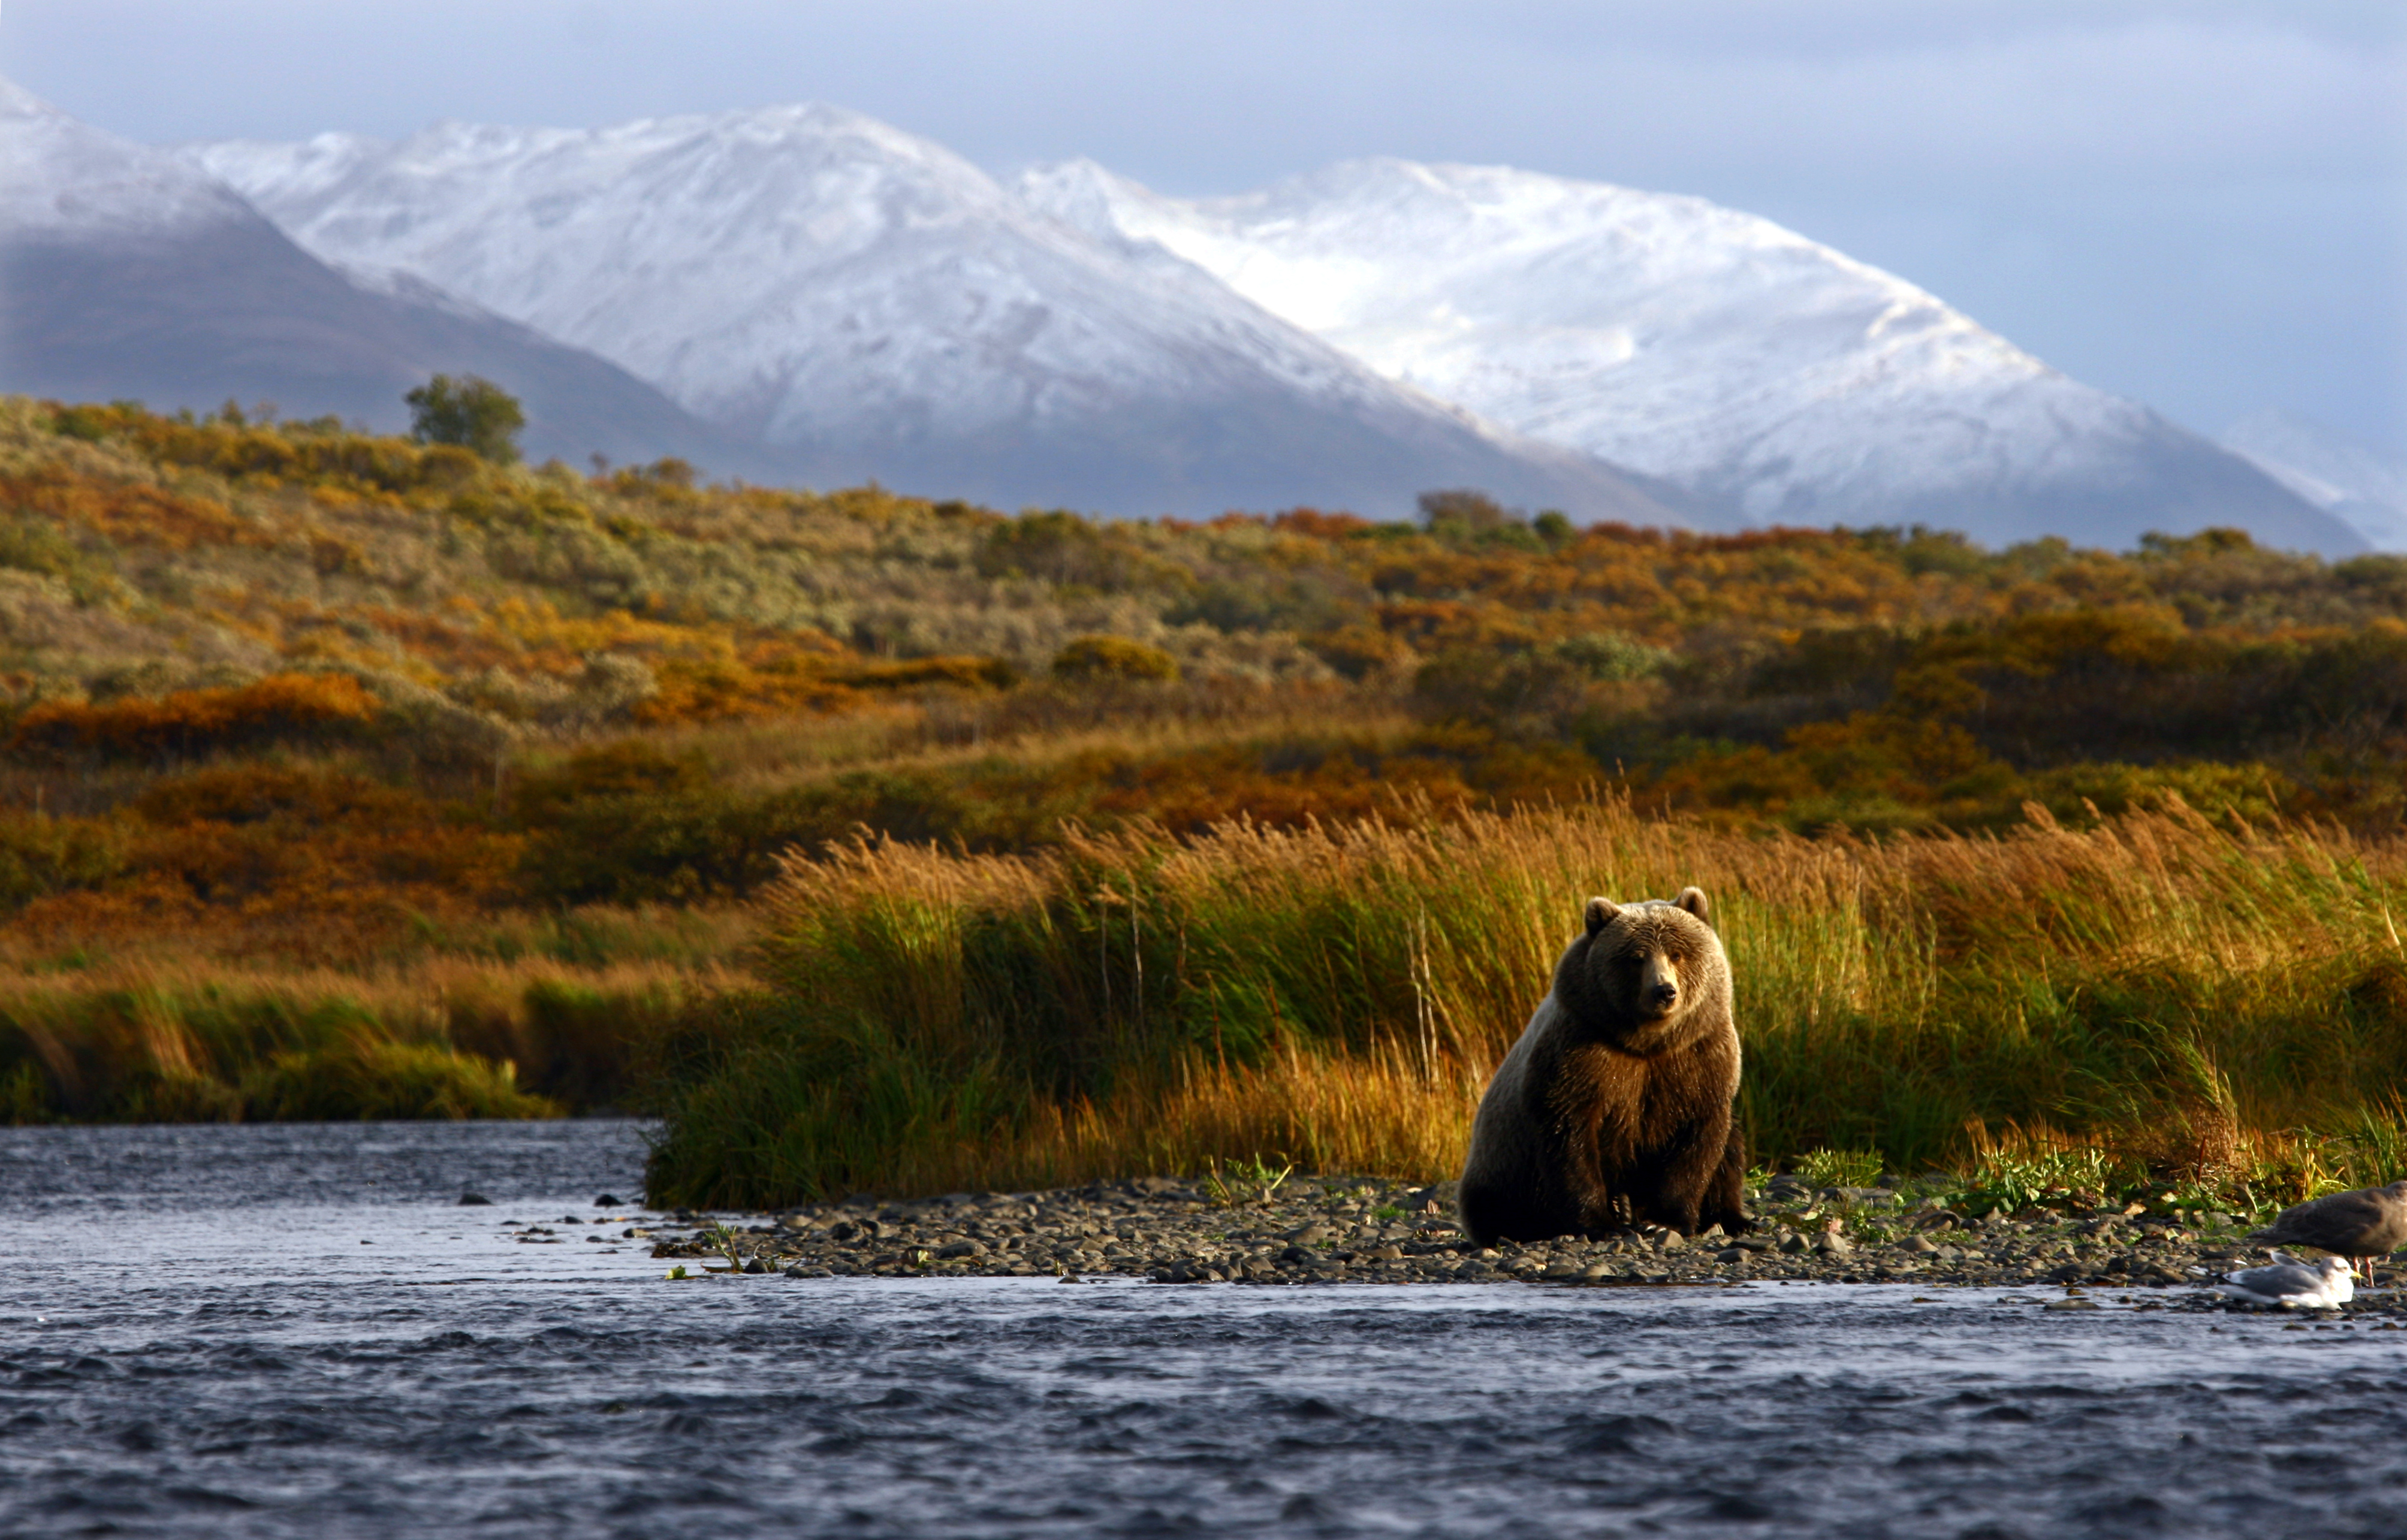 No Passport Required for These 7 Islands - Kodiak Bear on Kodiak Island